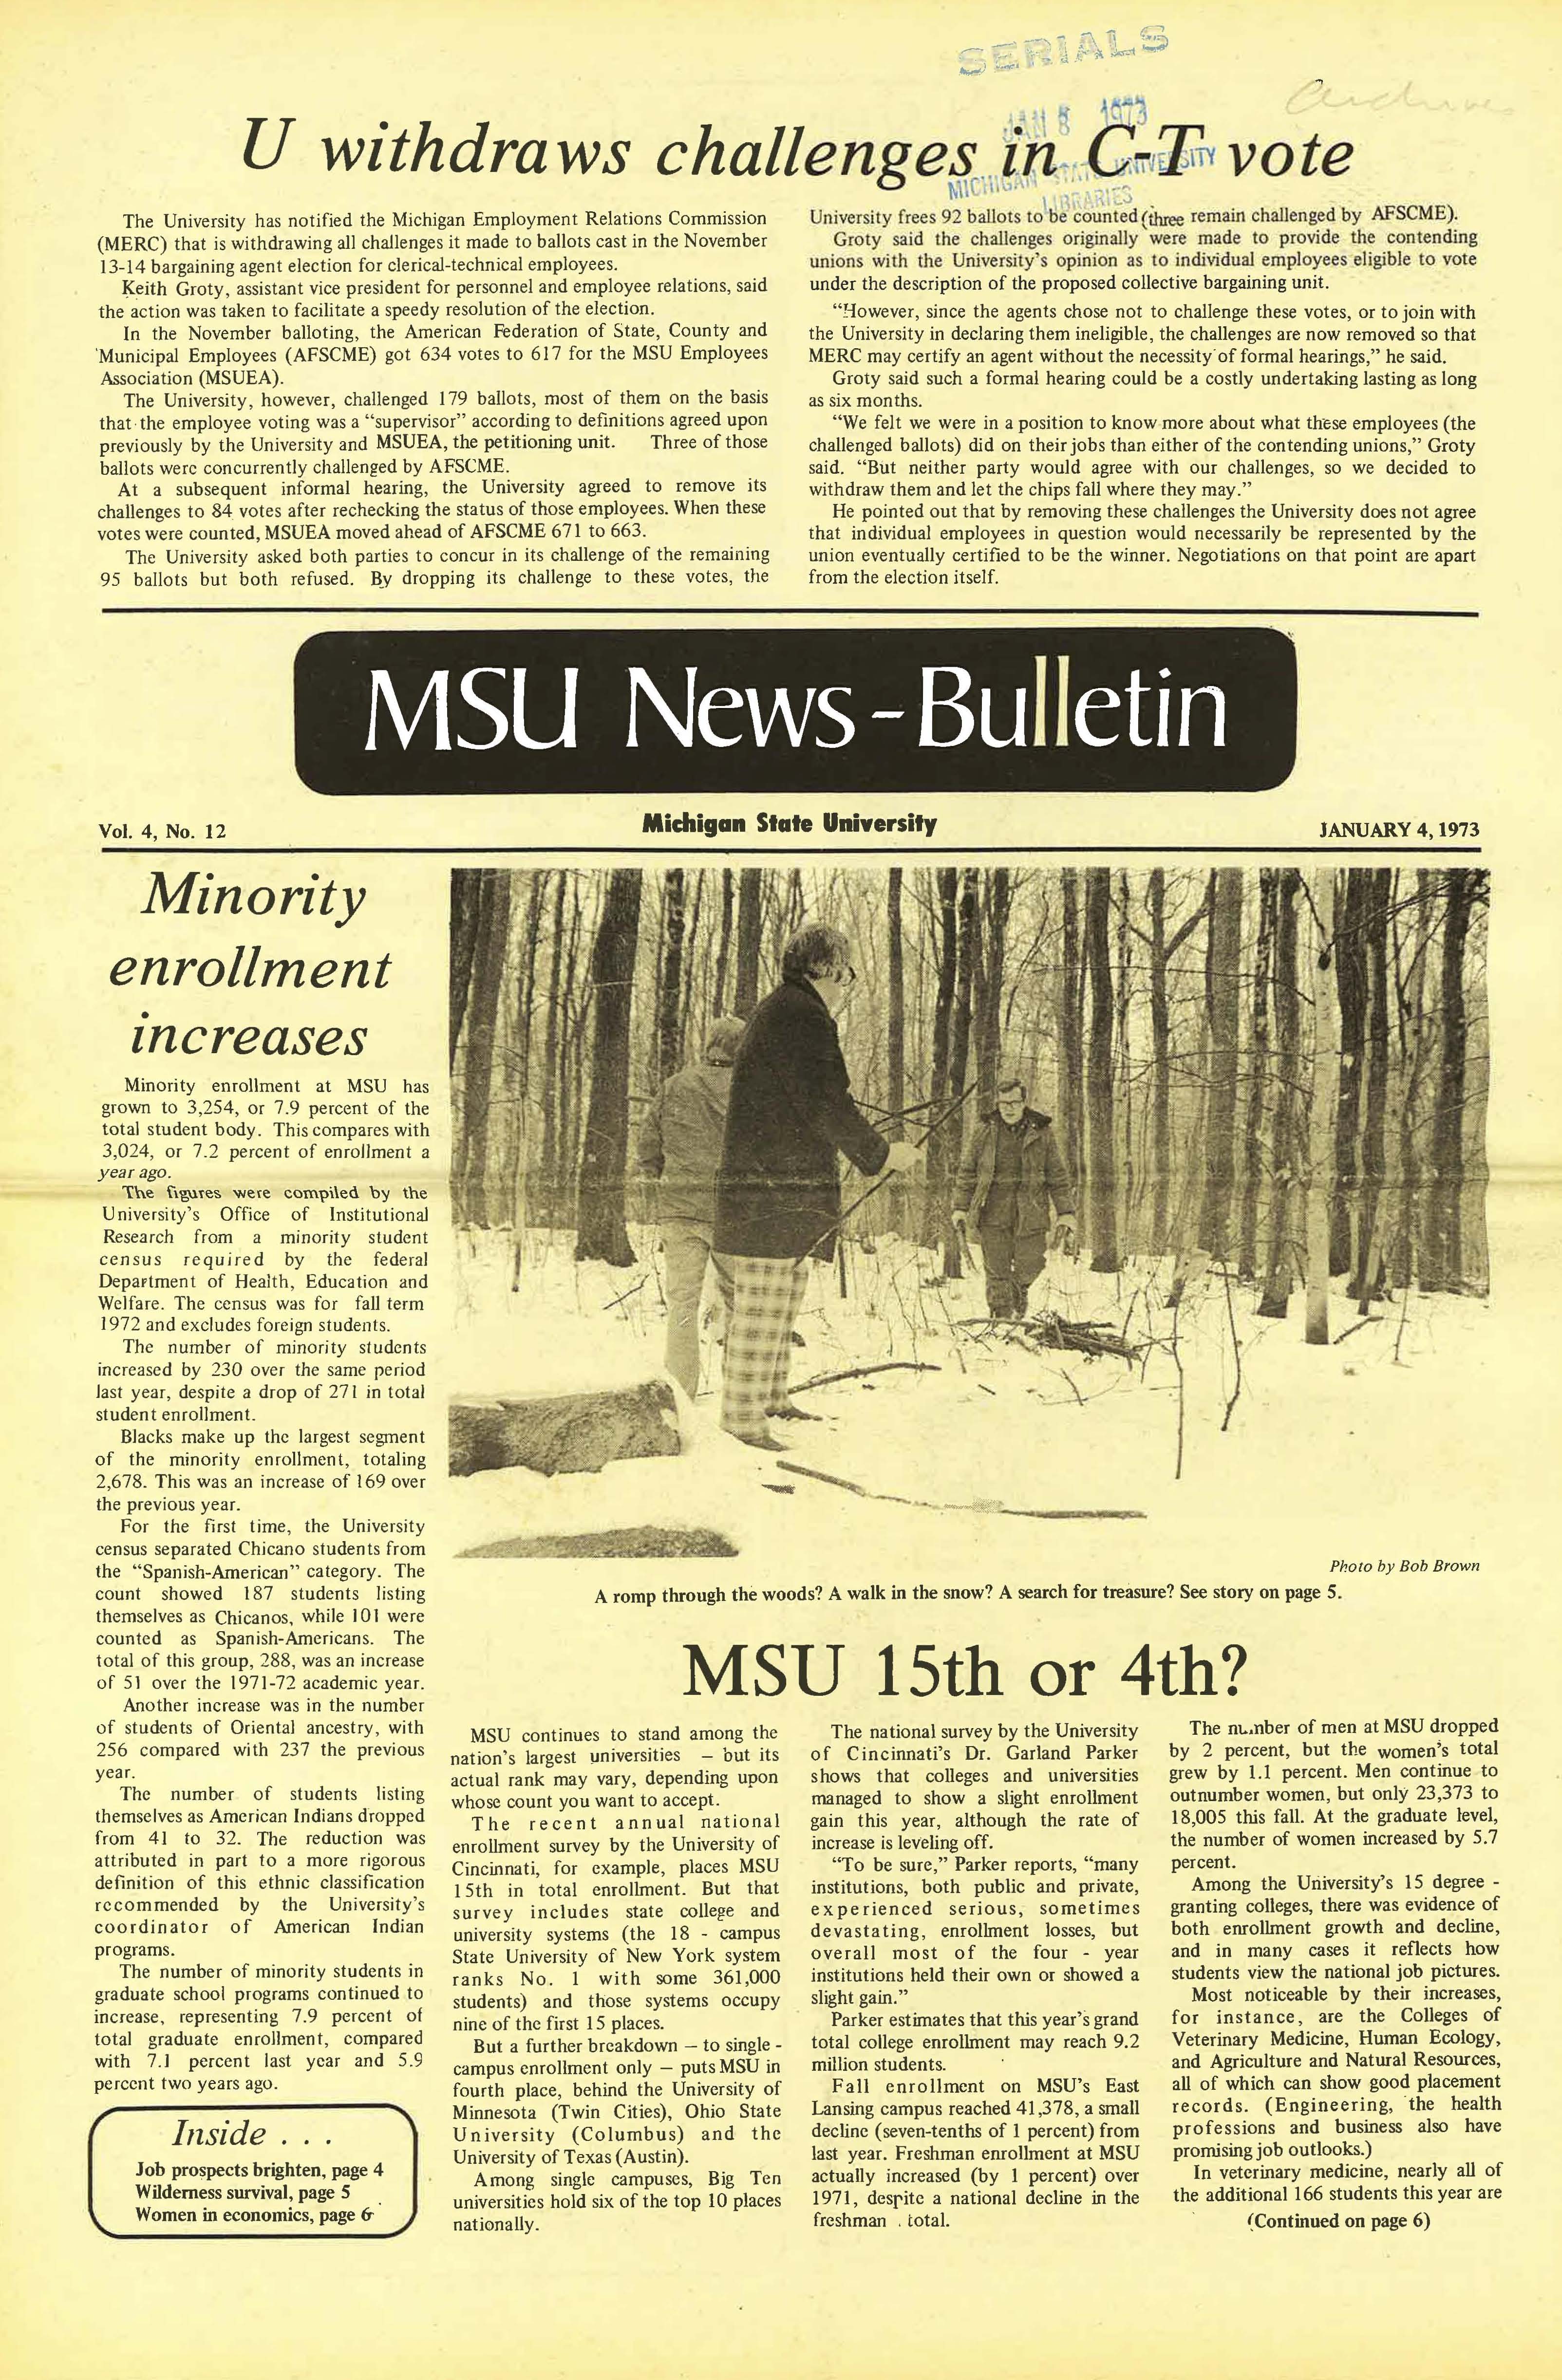 MSU News Bulletin, vol. 4, No. 36, August 9, 1973